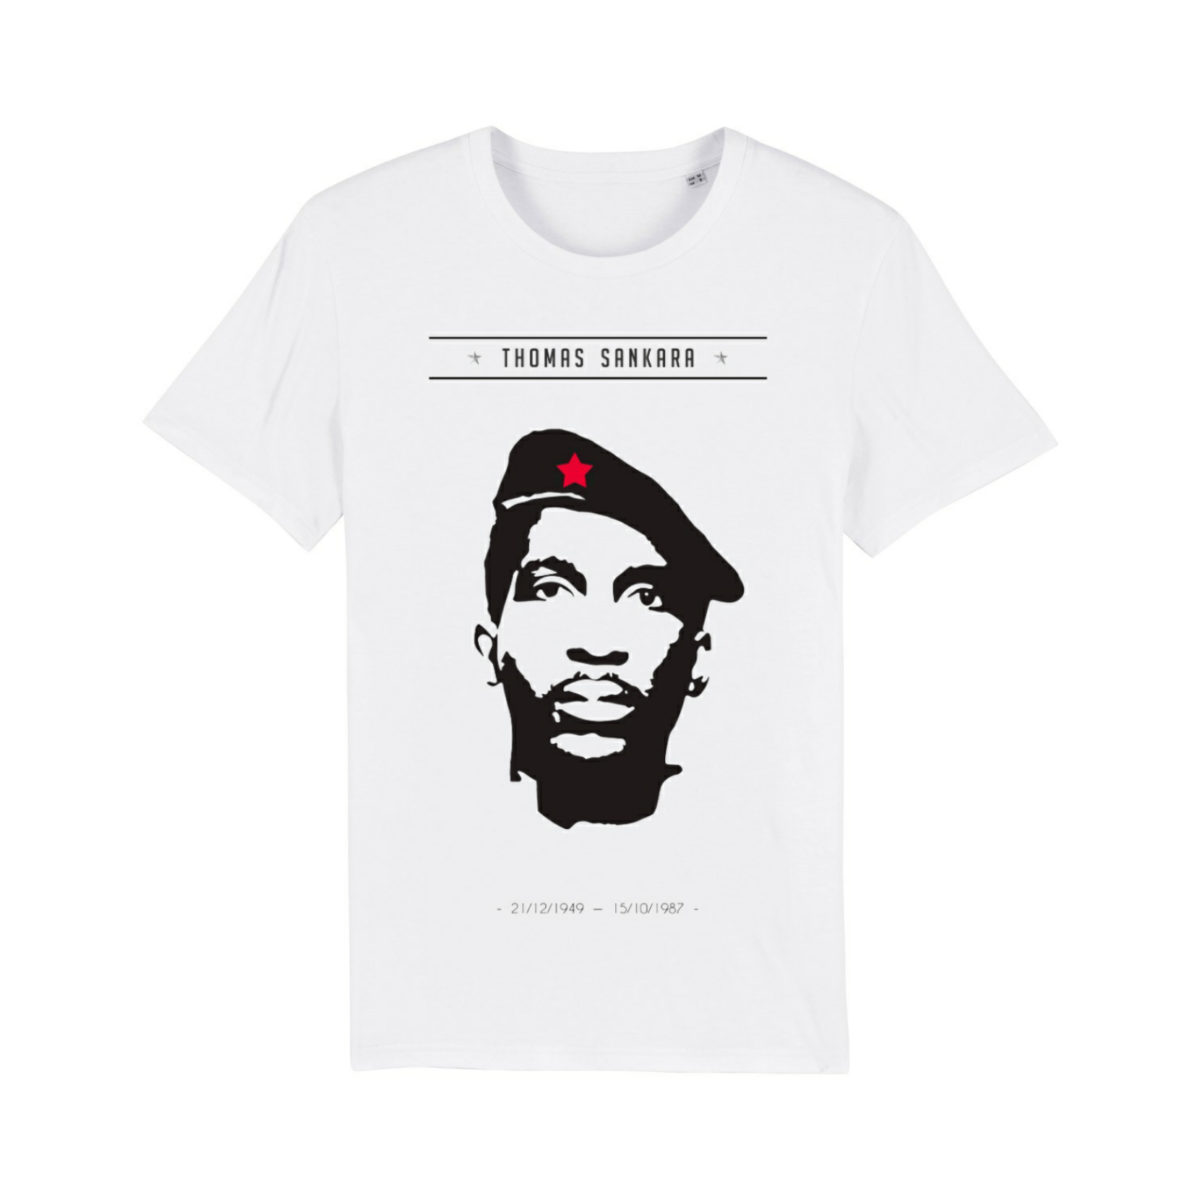 My T-Shirt Afro – “Thomas Sankara”